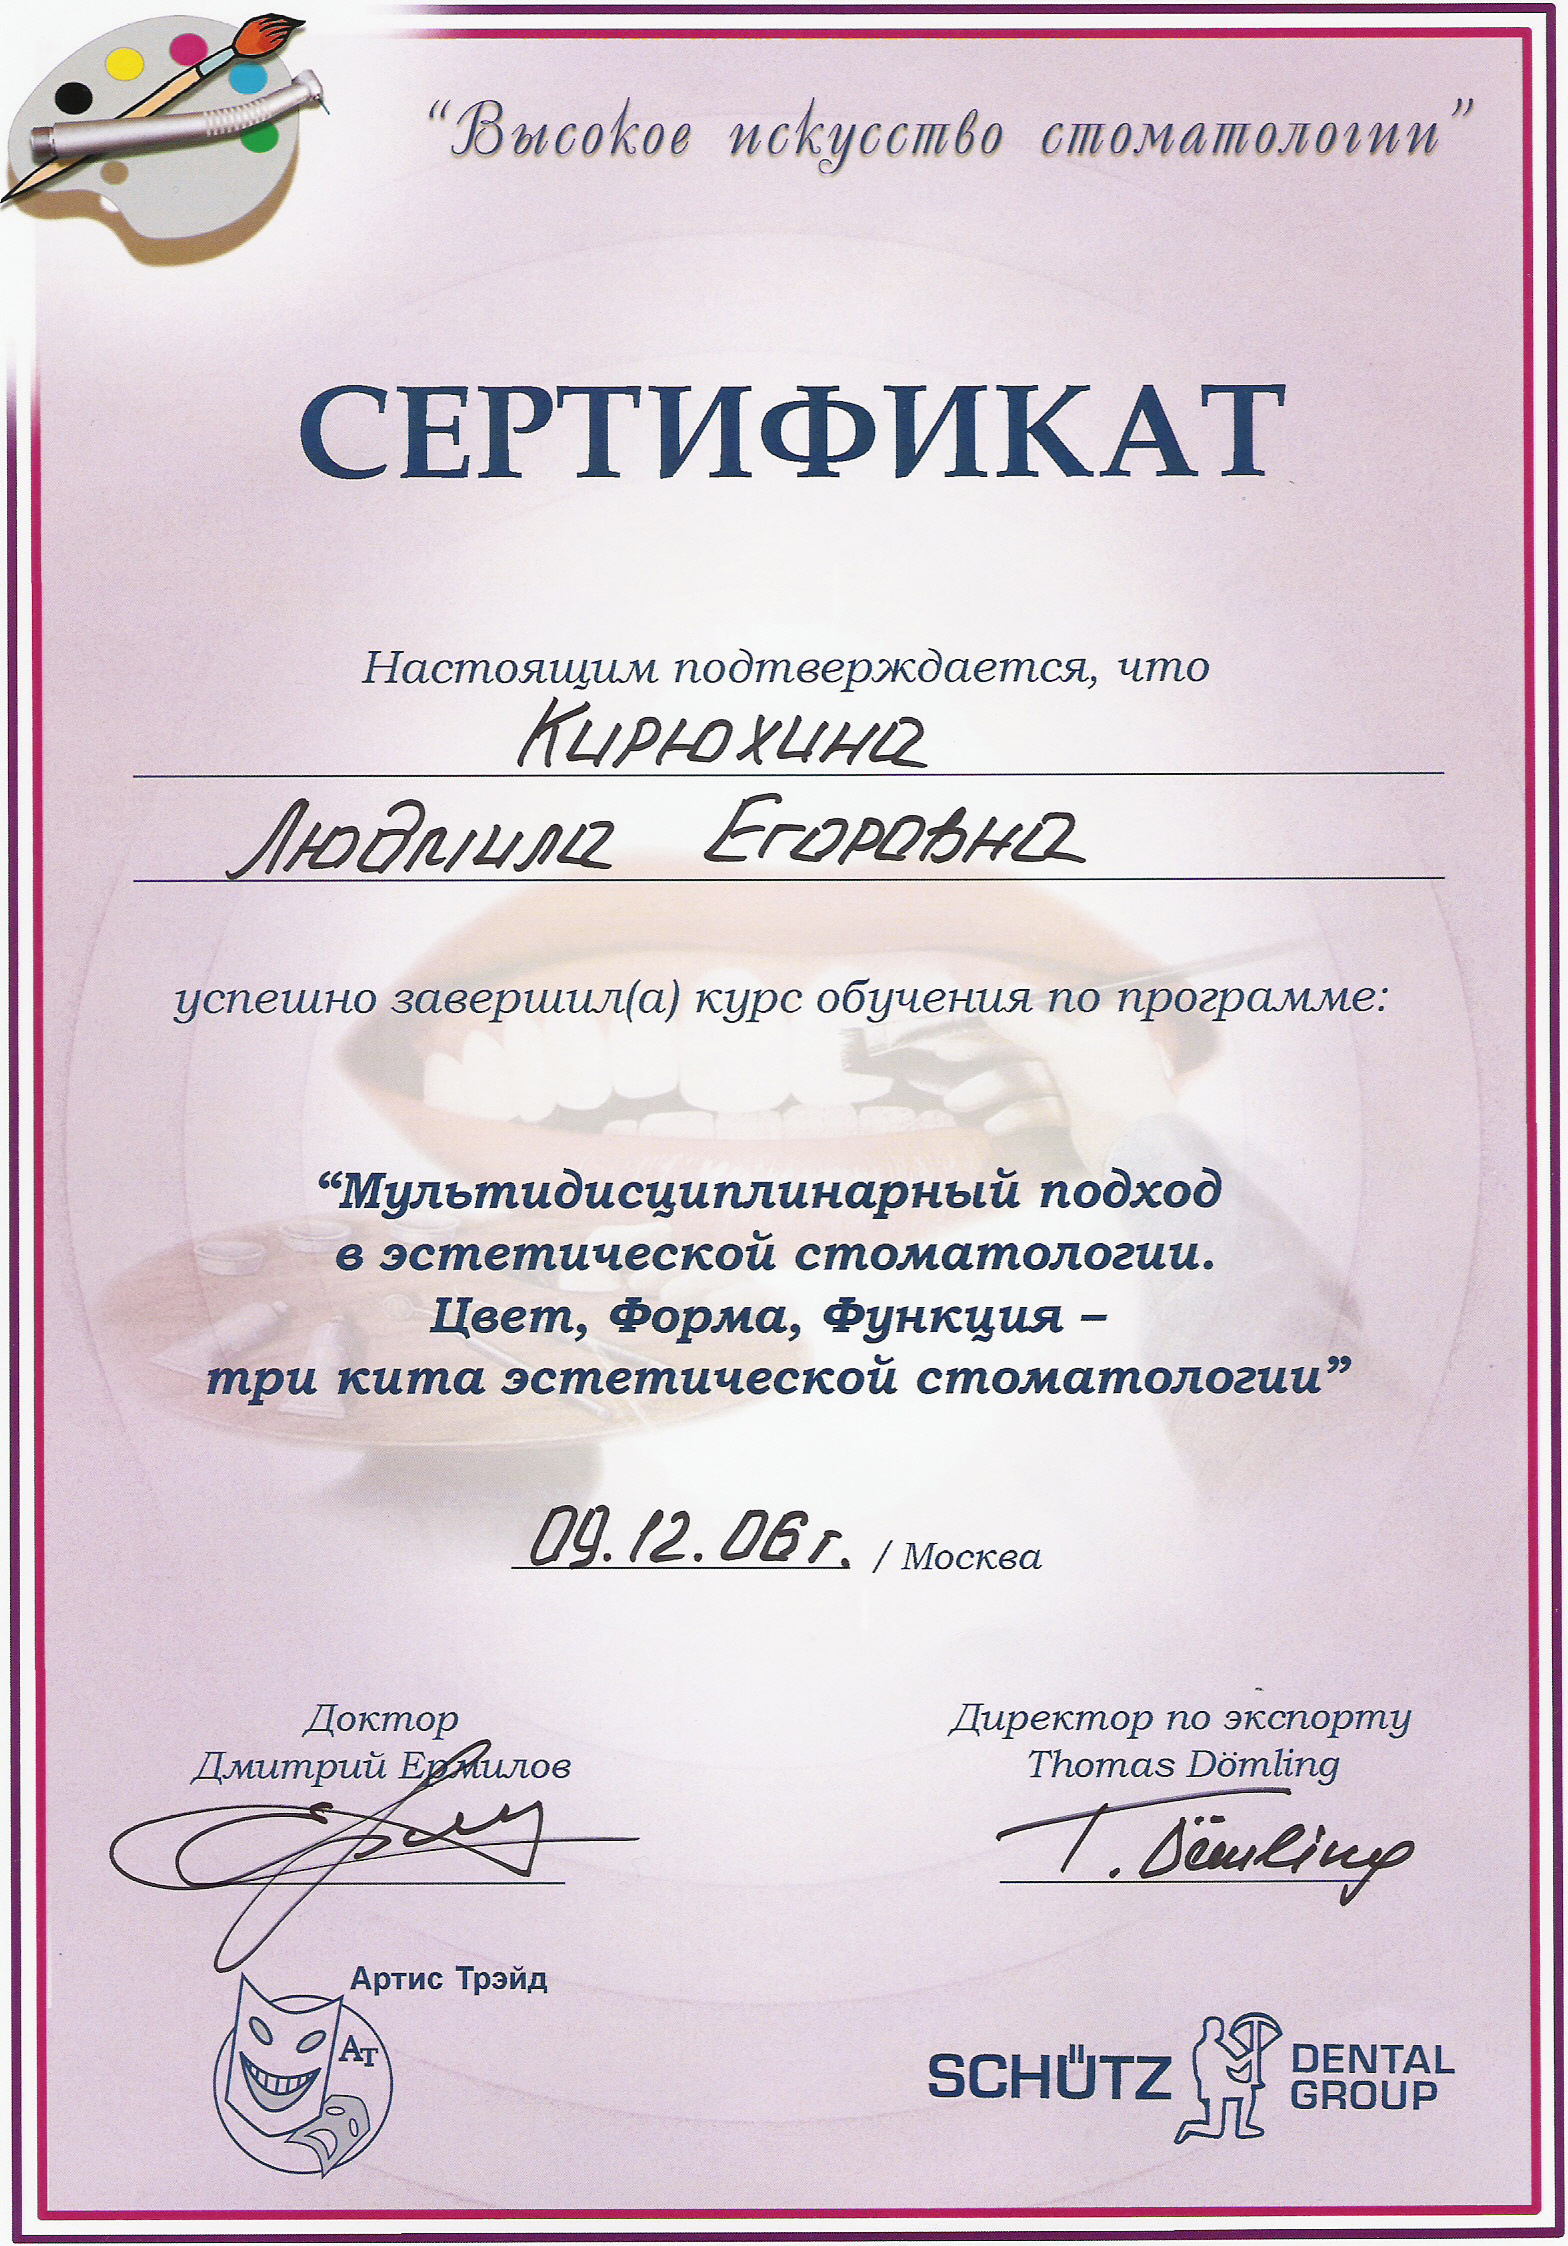 Кирюхина Людмила Егоровна - Сертификат_05